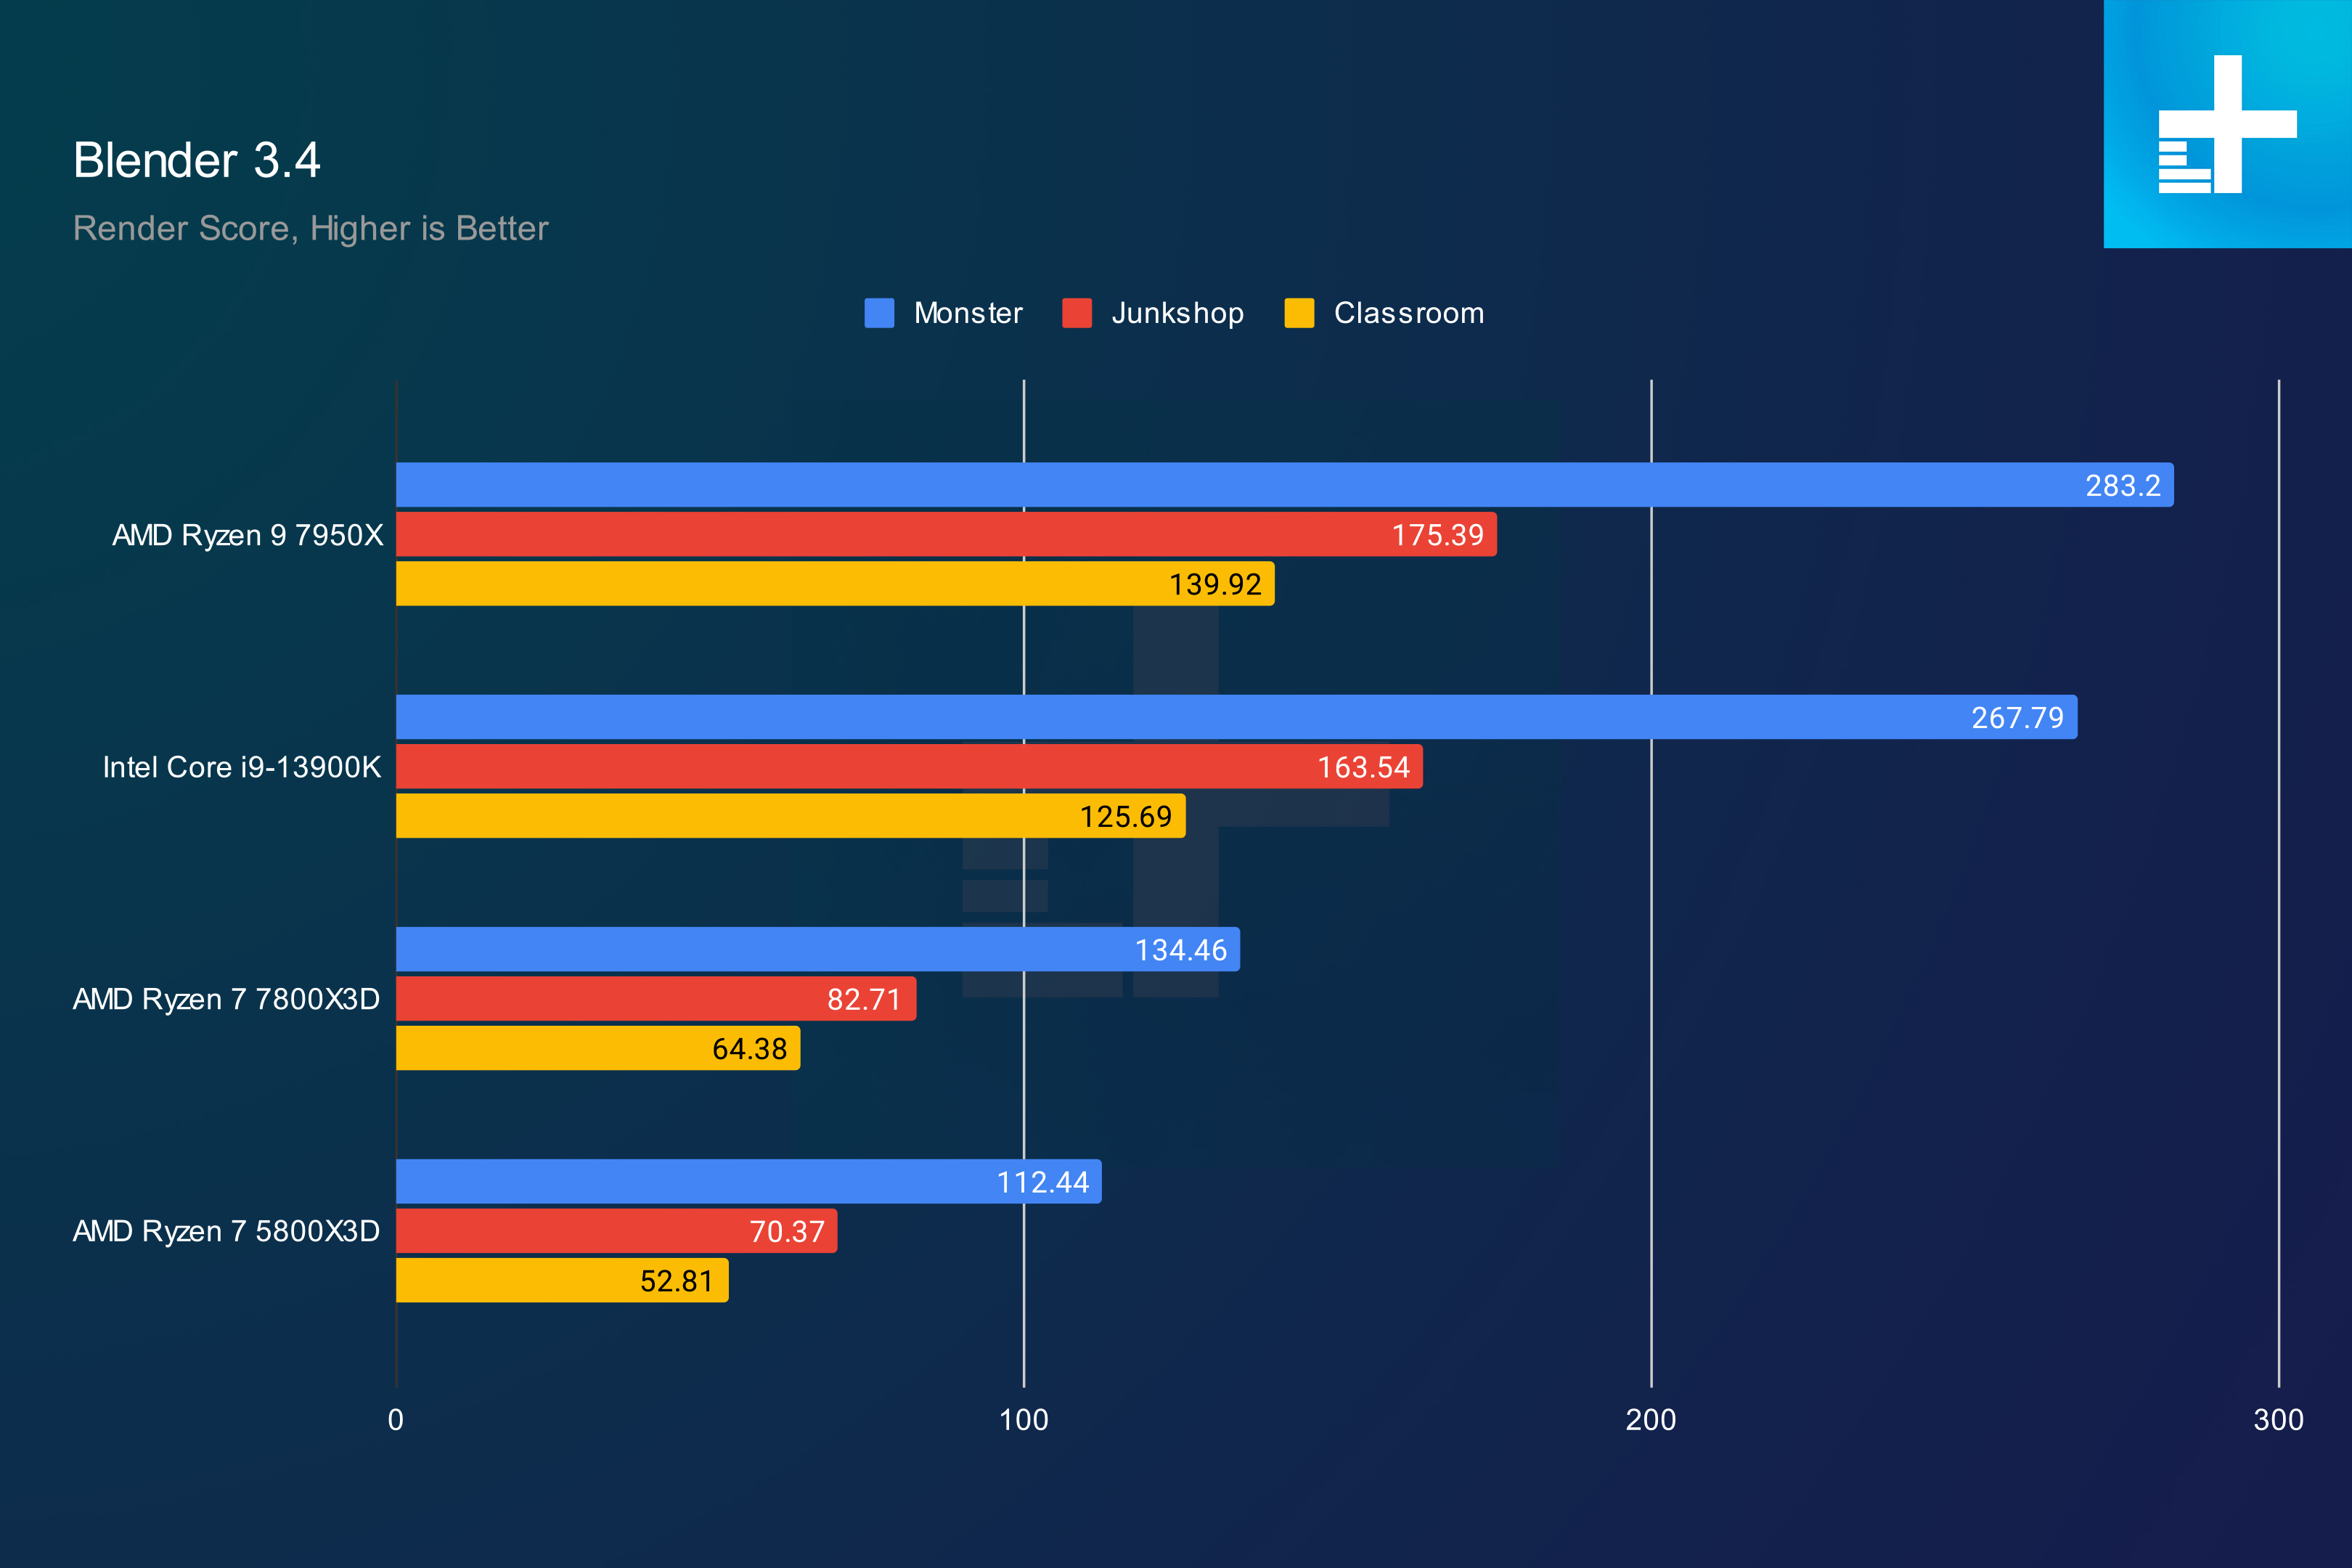 Blender benchmark results for the AMD Ryzen 7 7800X3D.